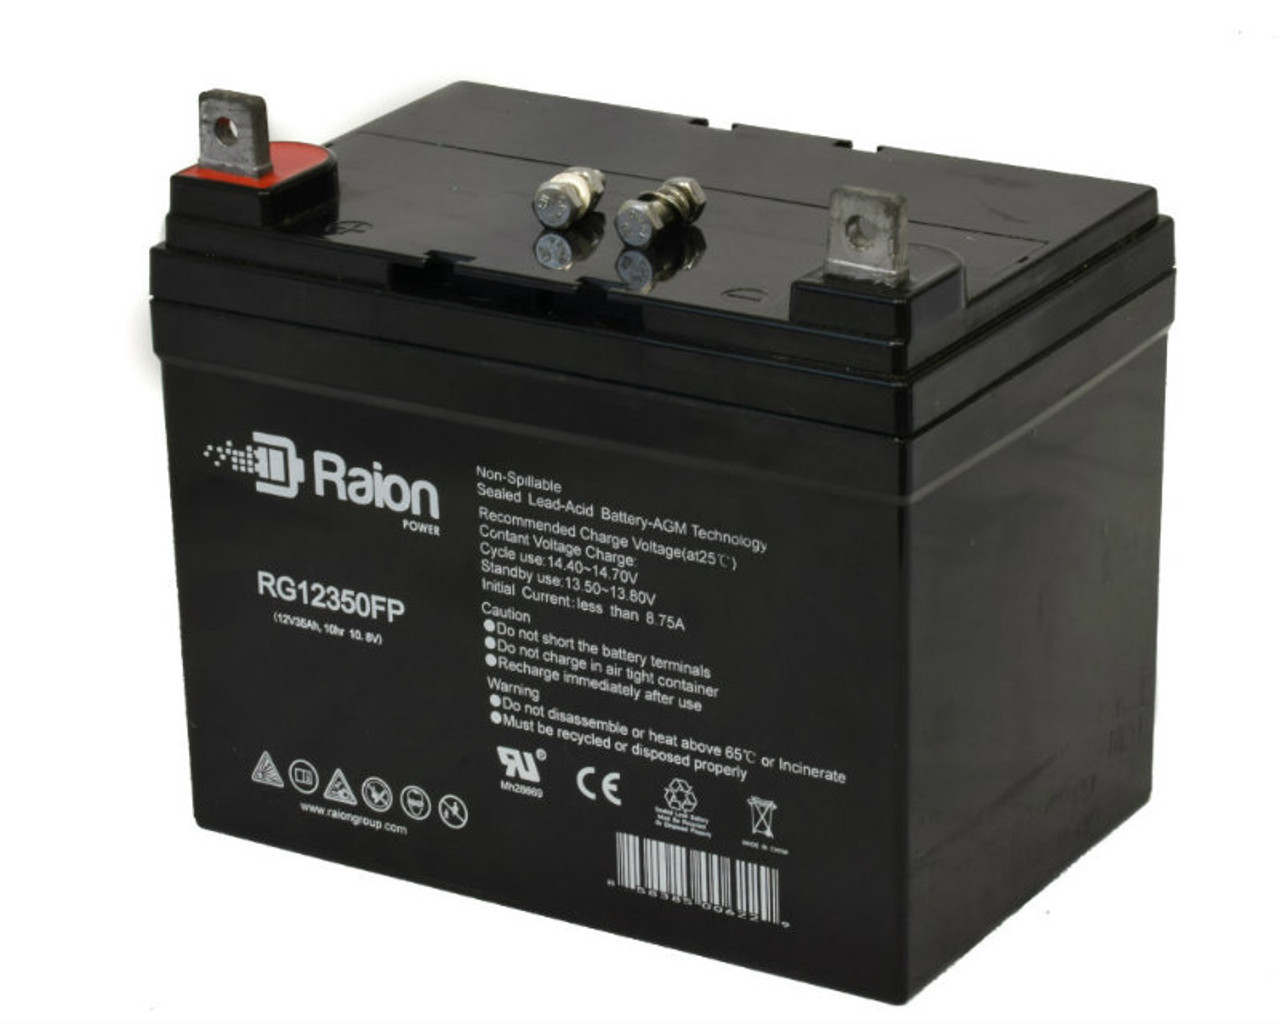 Raion Power Replacement 12V 35Ah RG12350FP Battery for Kubota G3200